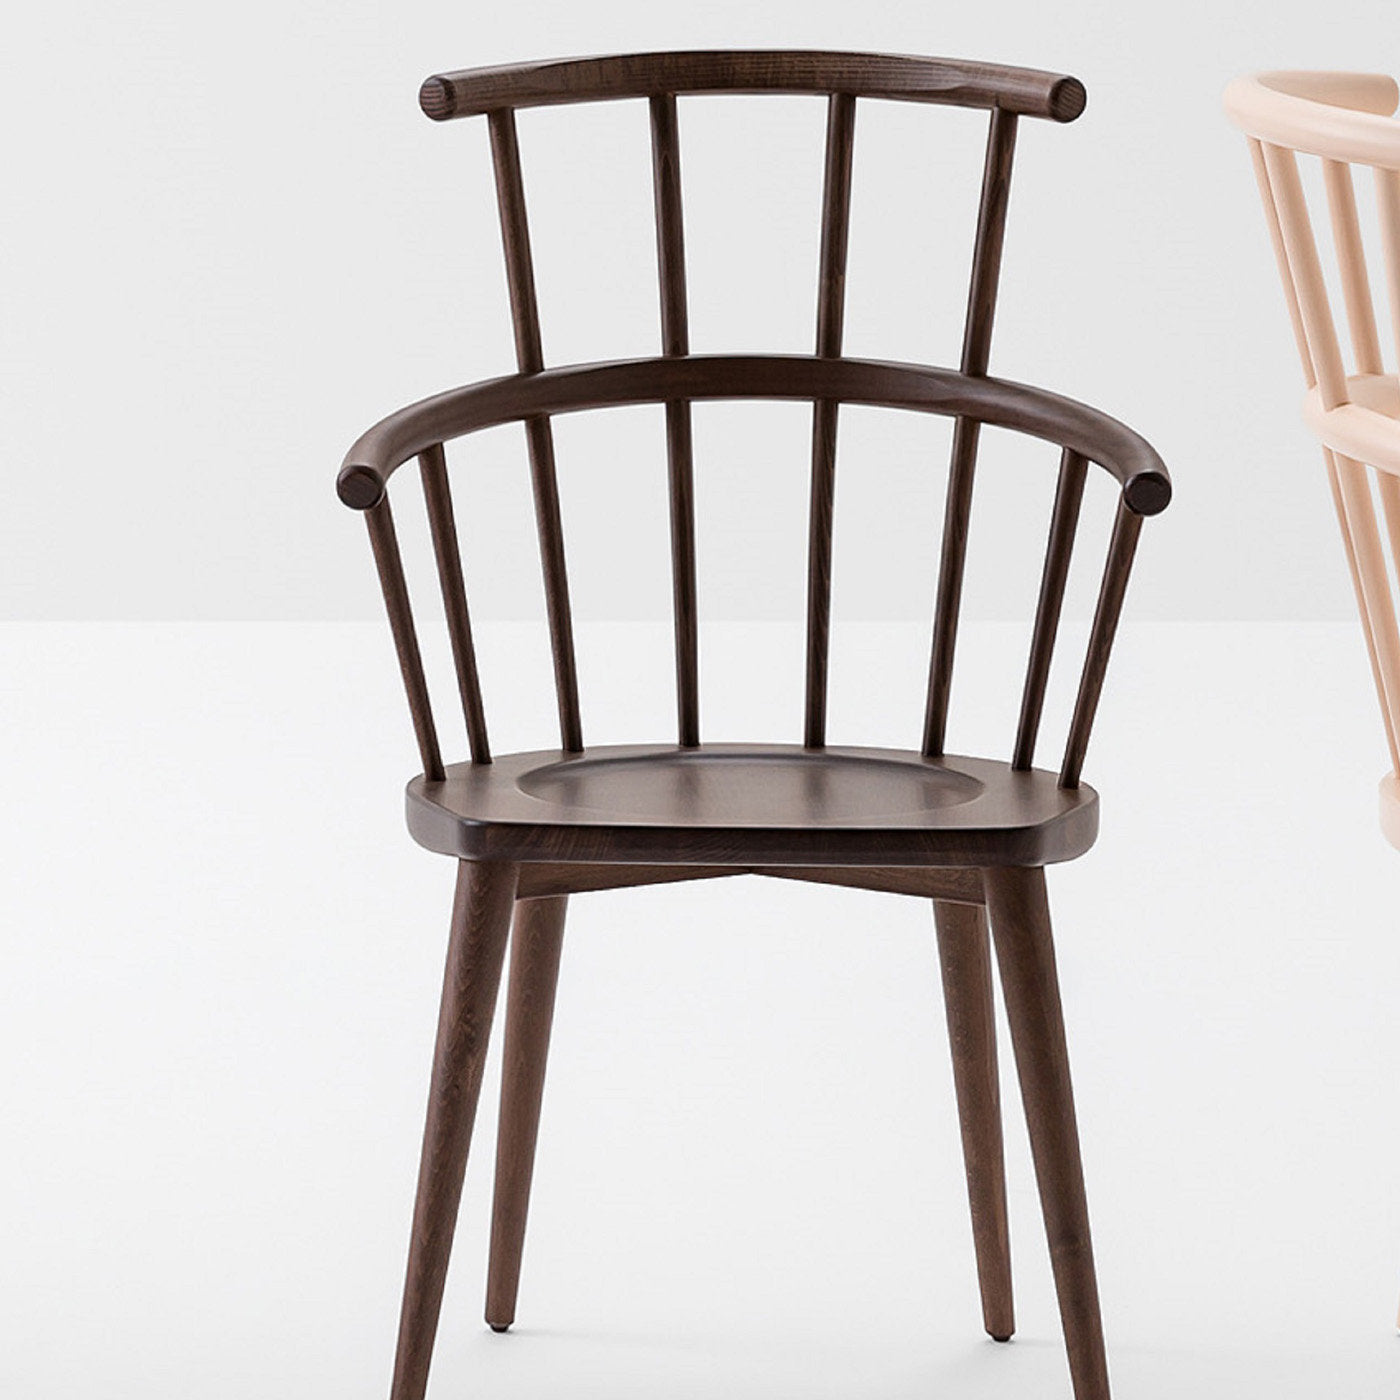 W. Chair by Fabrizio Gallinaro #1 - Alternative view 1